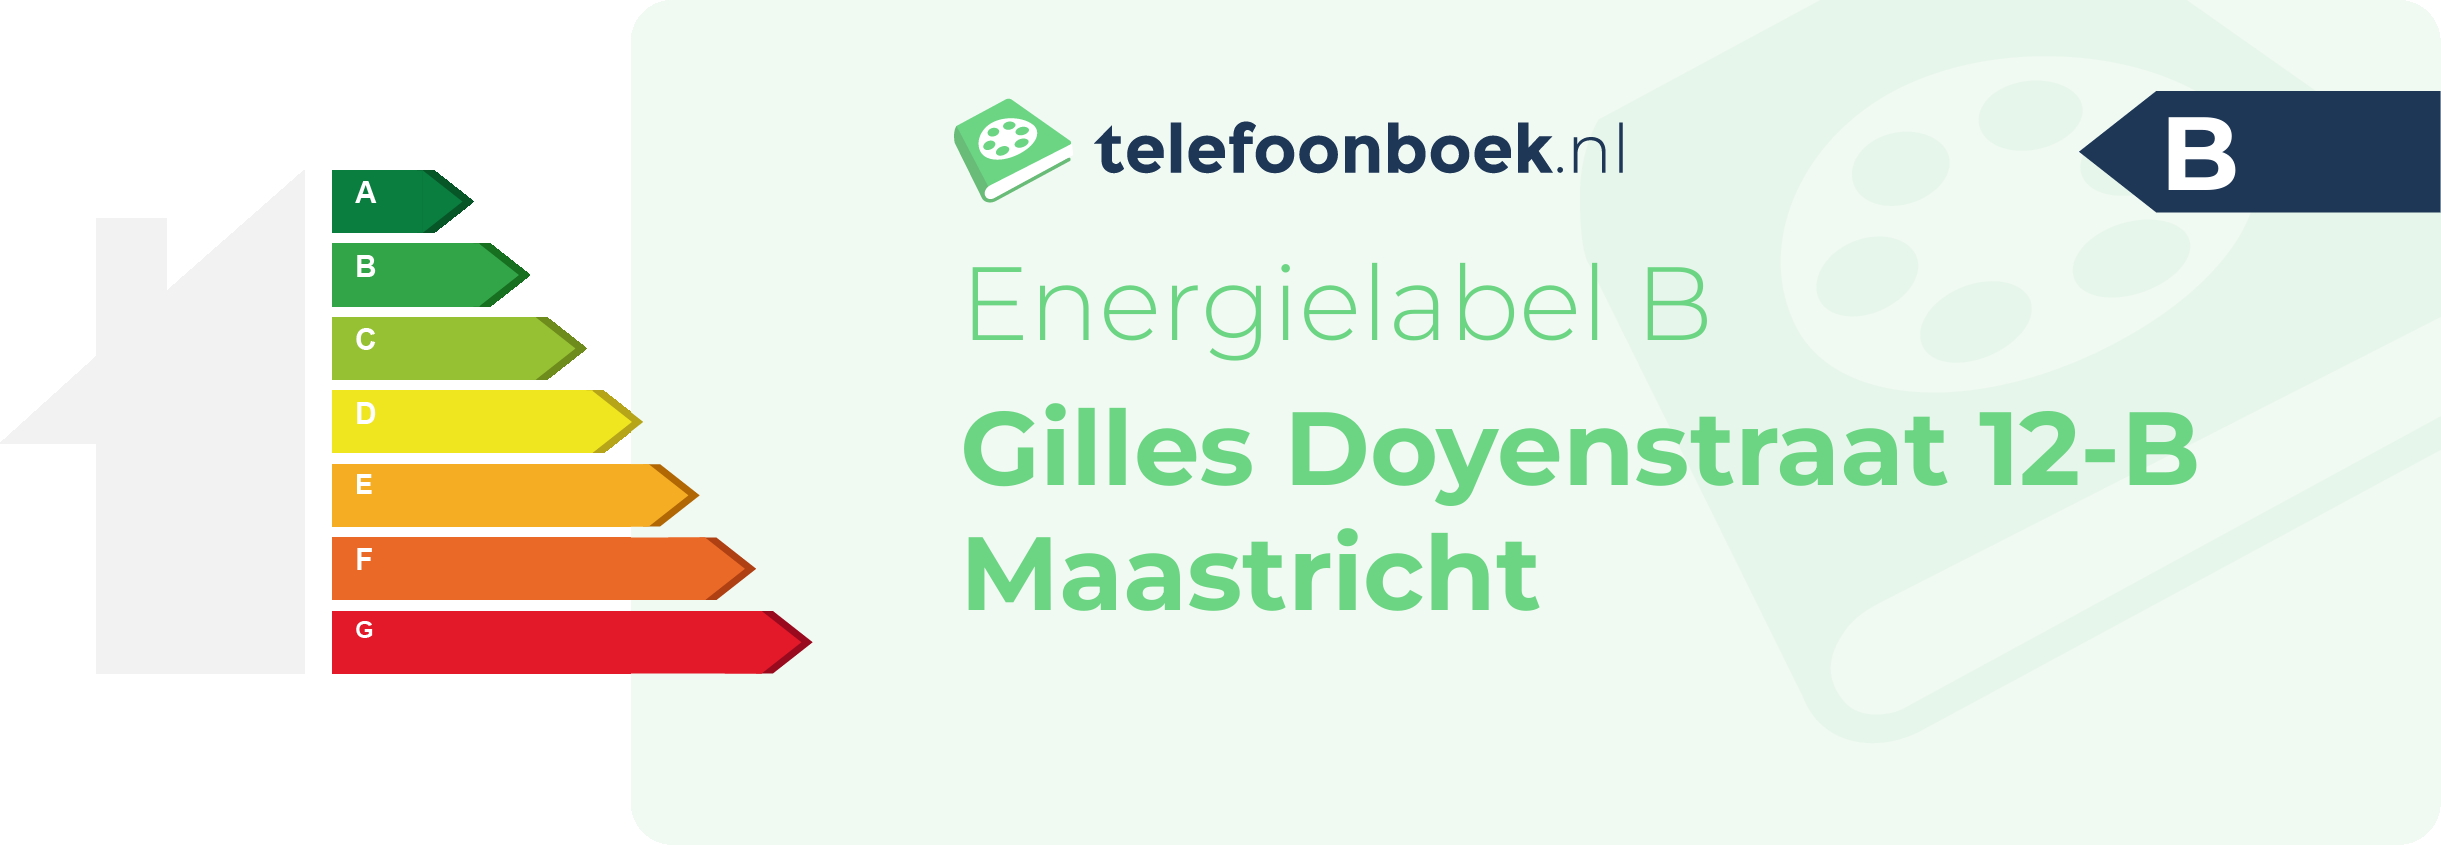 Energielabel Gilles Doyenstraat 12-B Maastricht